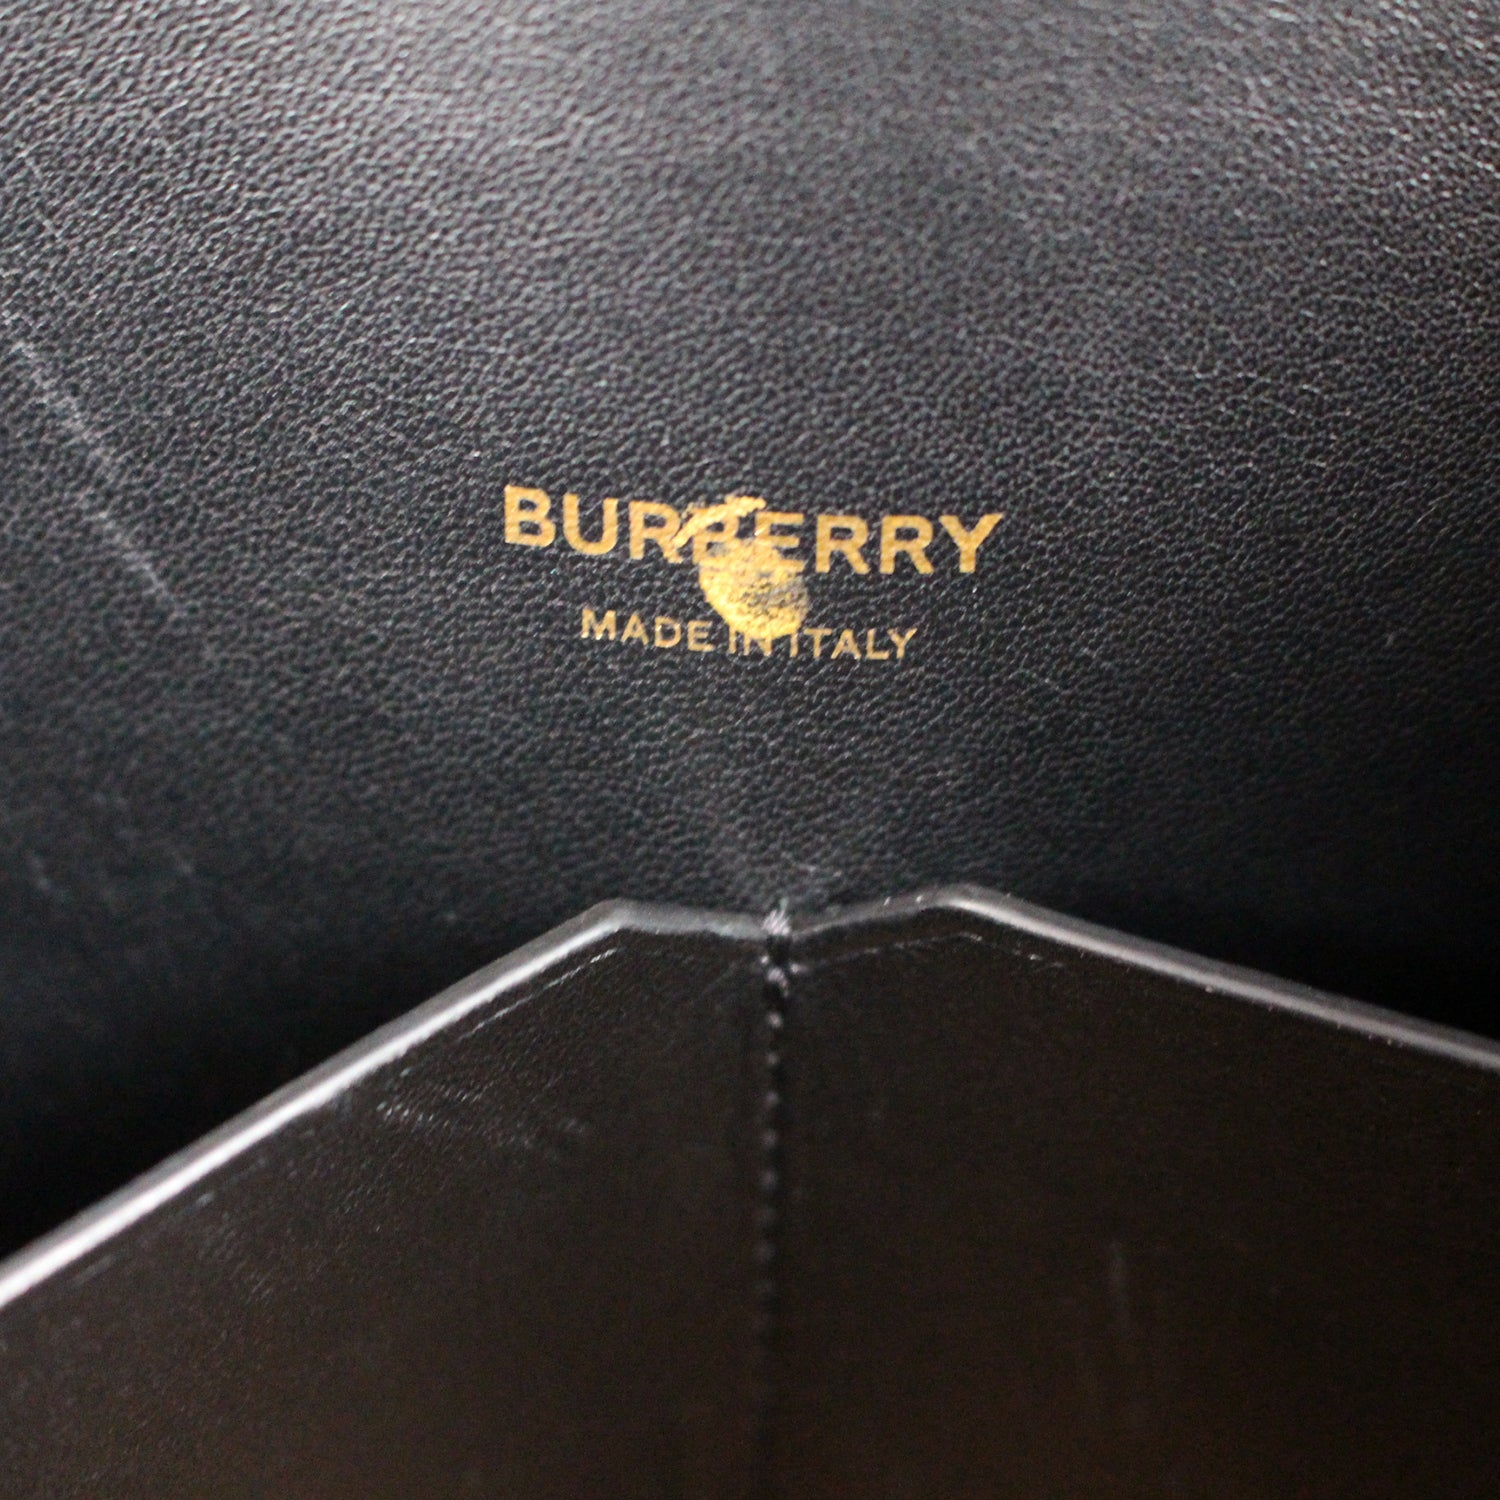 Totes bags Burberry - Society medium bag - 8037378